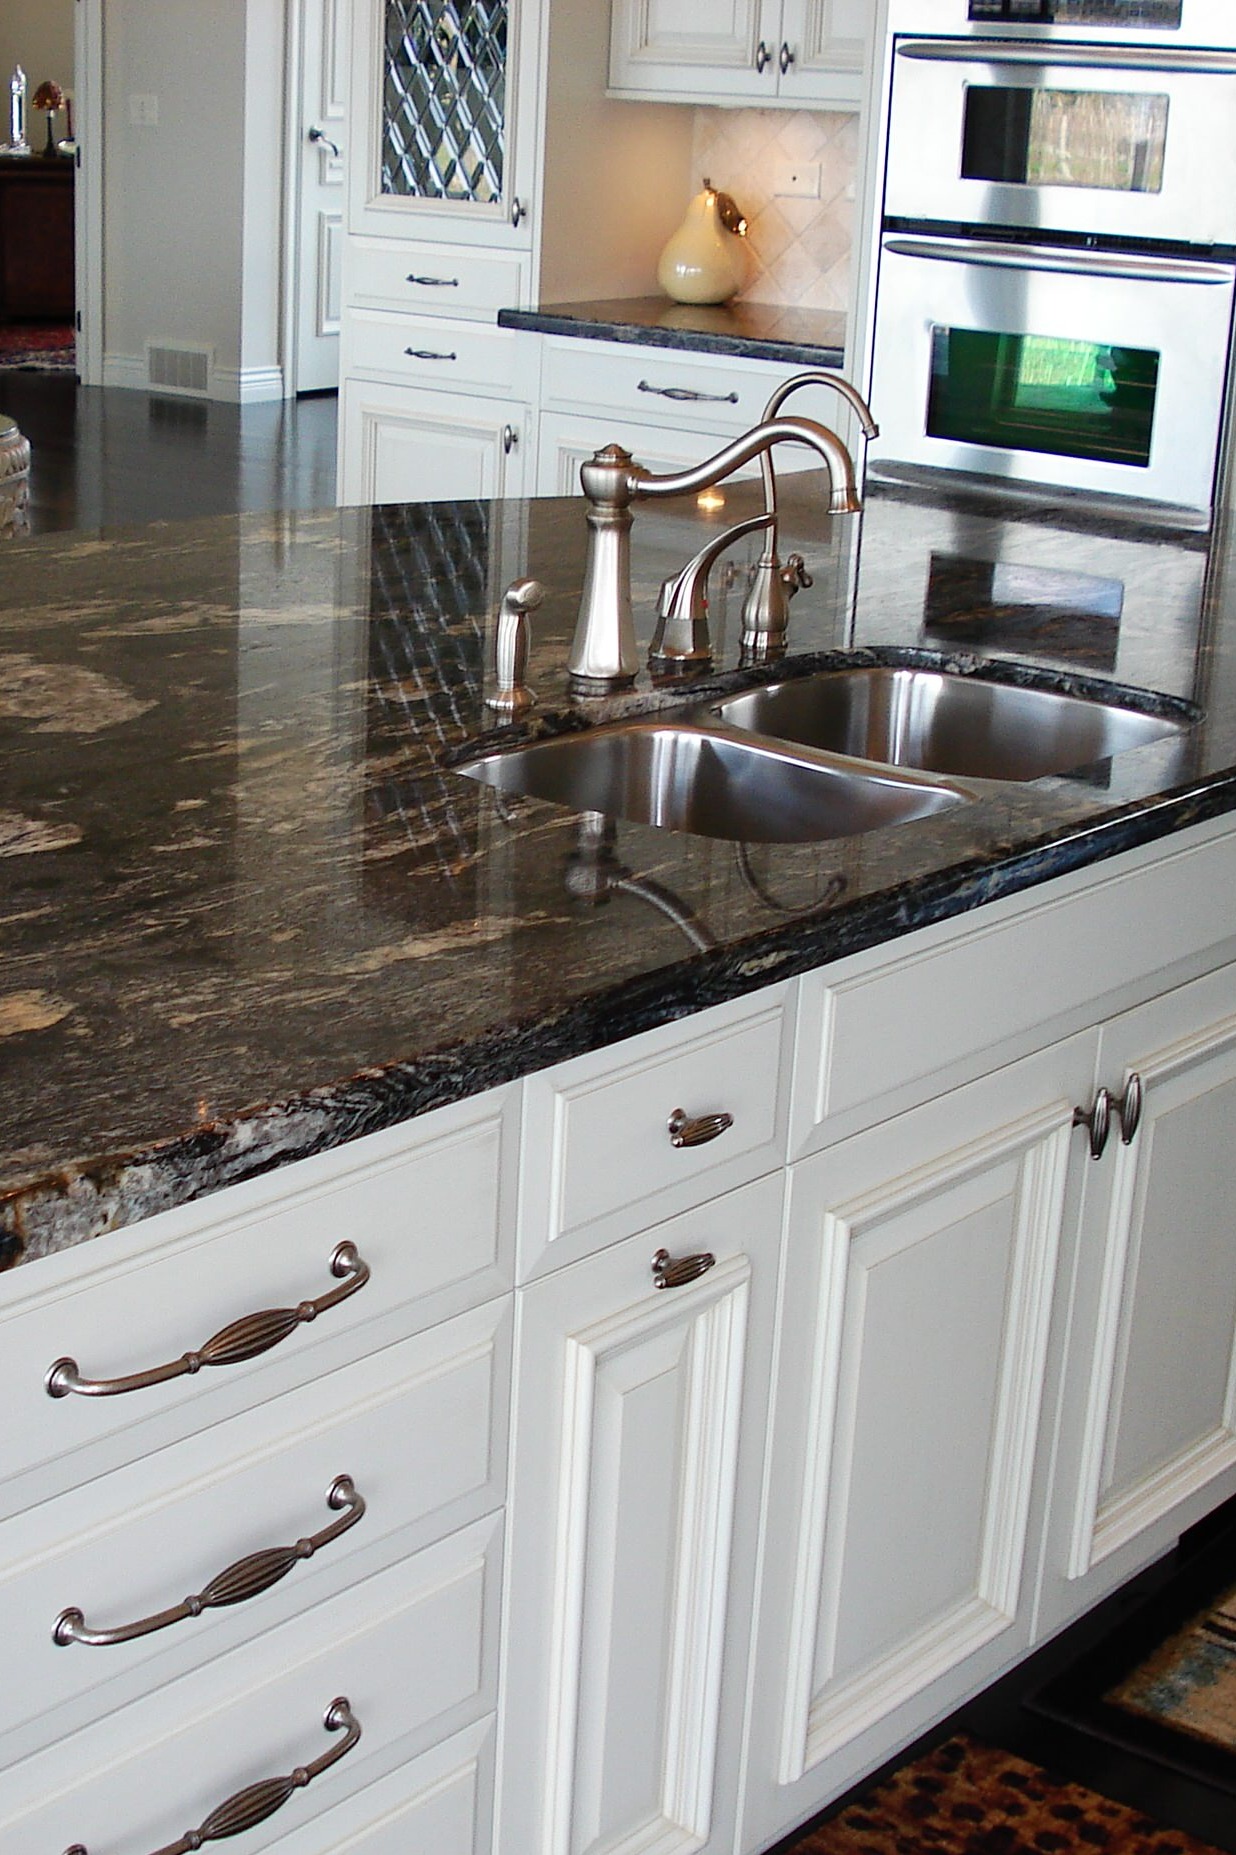  white kitchen cabinets with granite countertops